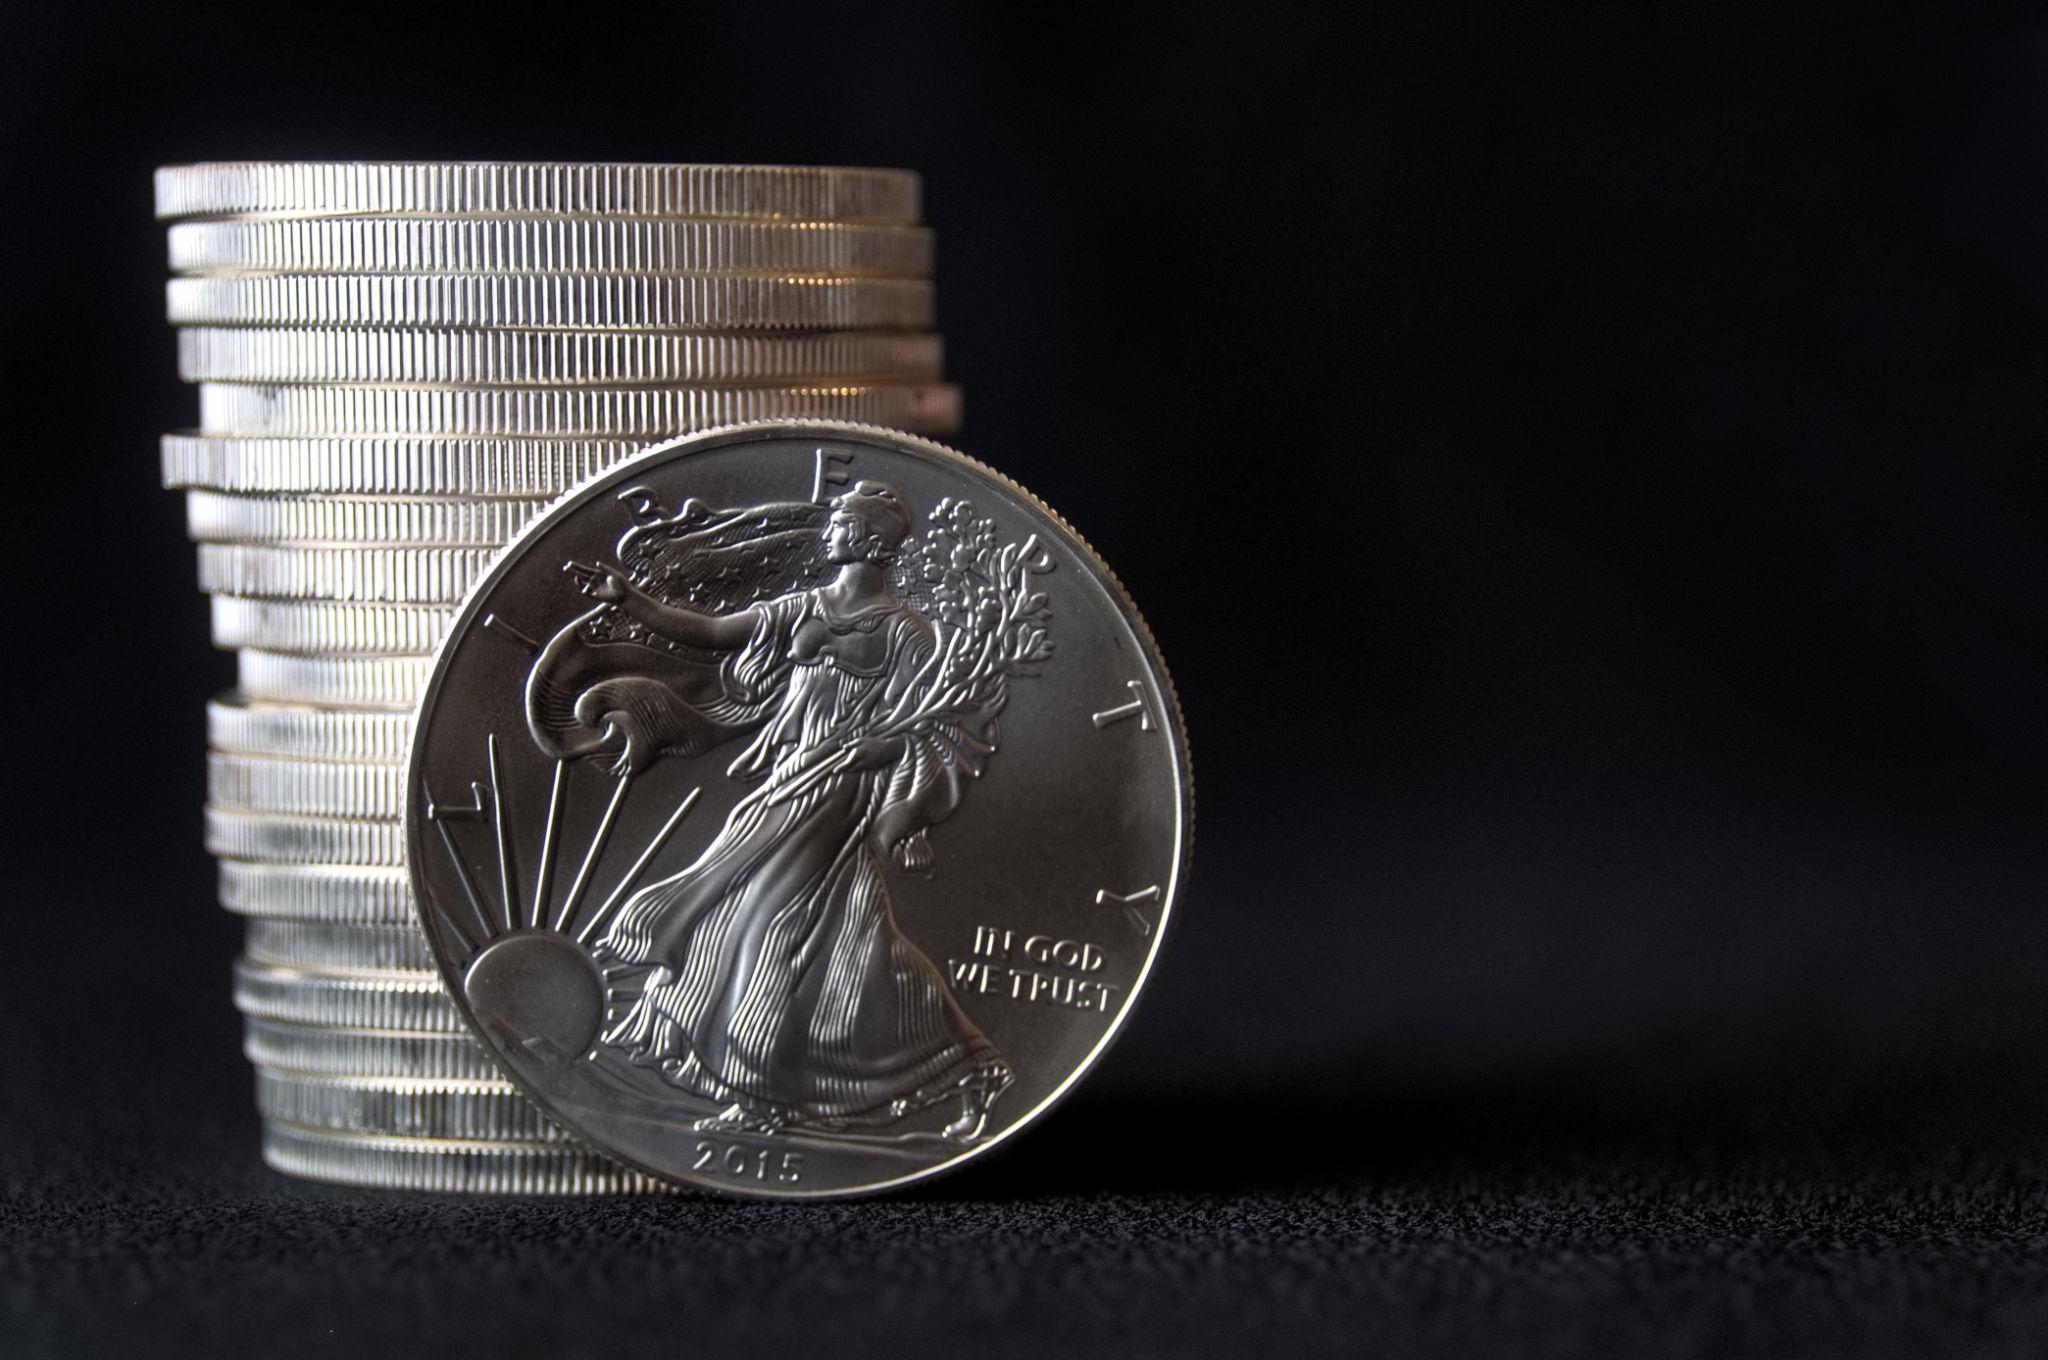 An American Silver Eagle coin